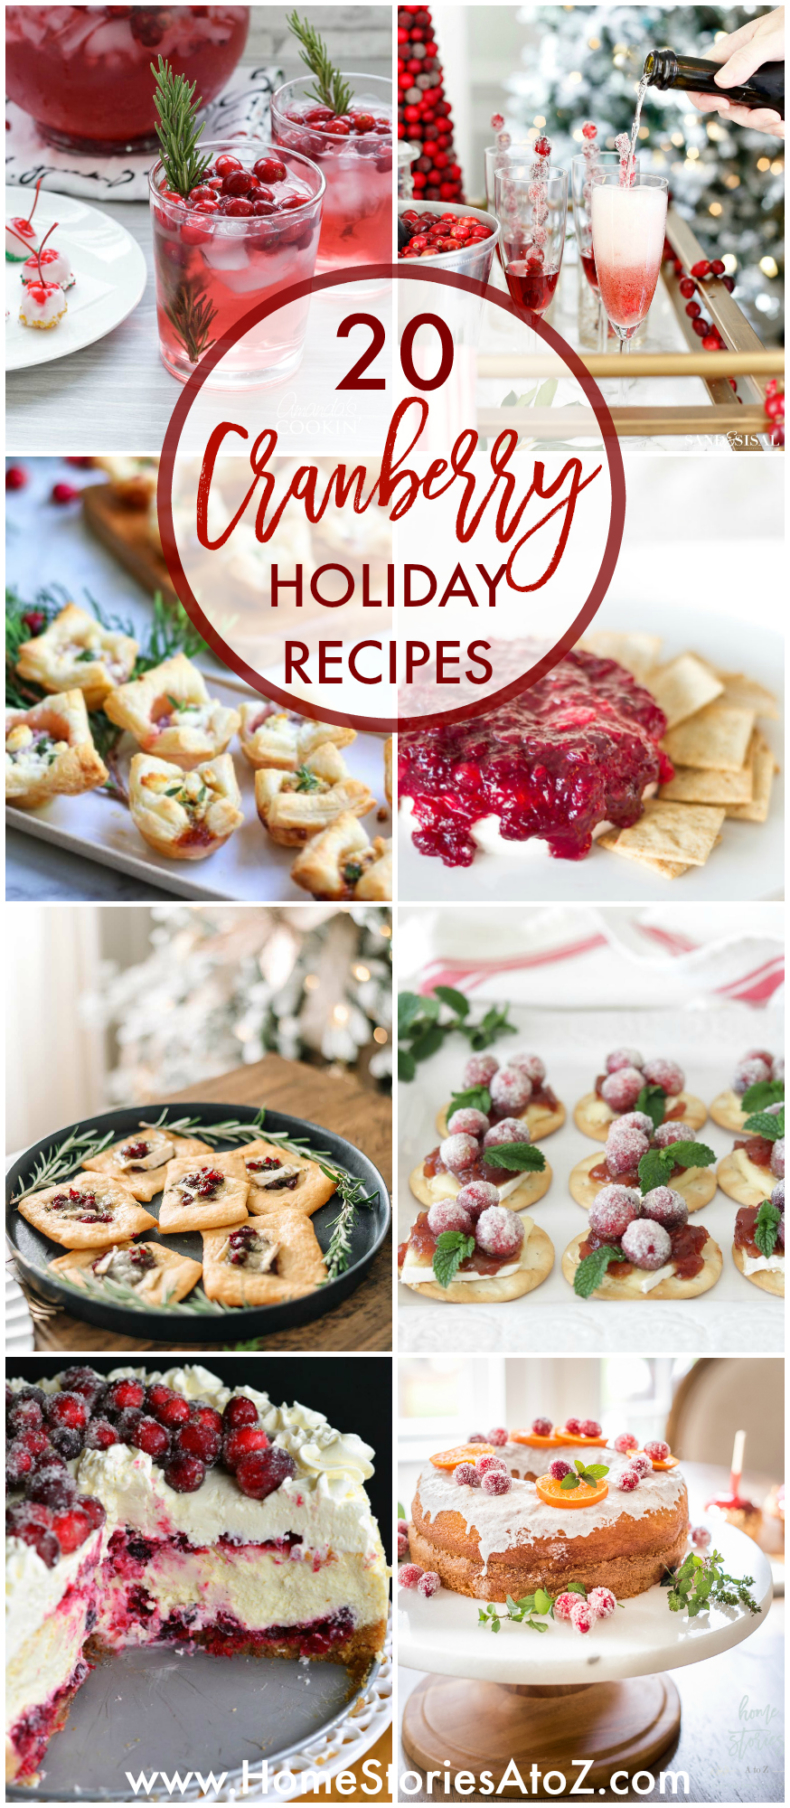 20 Cranberry Holiday Recipes